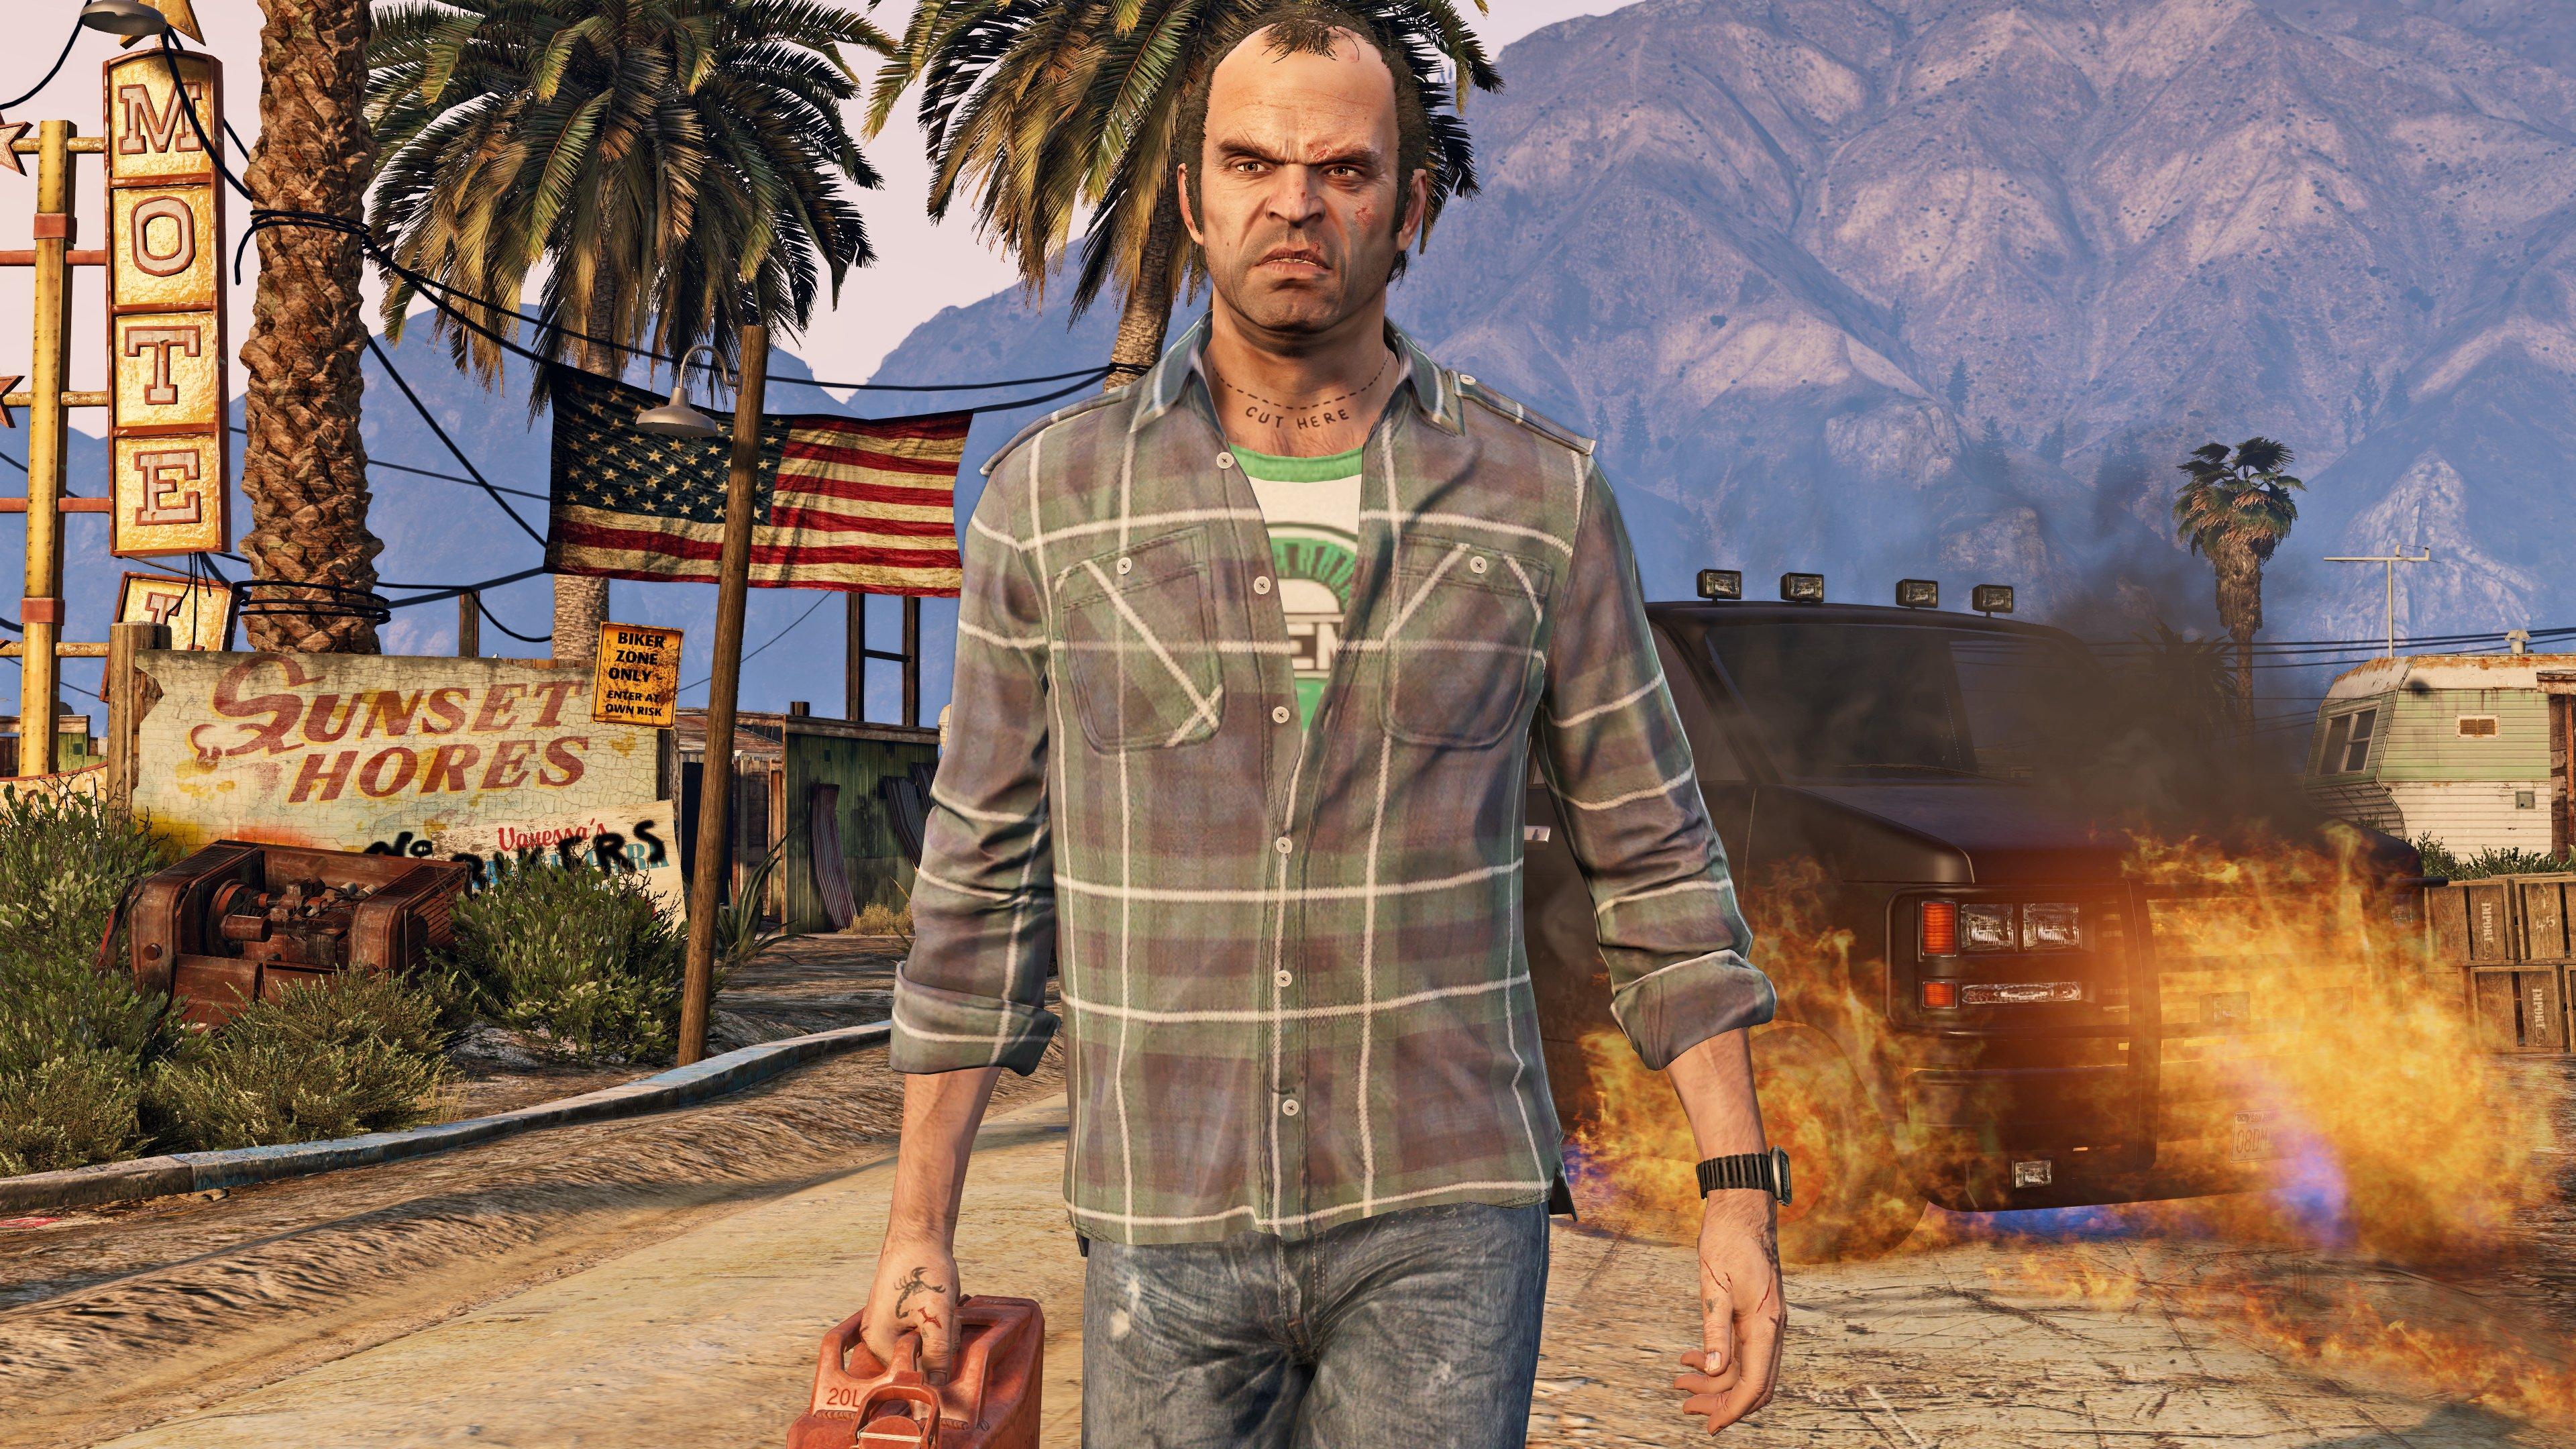 Buy Grand Theft Auto V: Premium Edition, PC